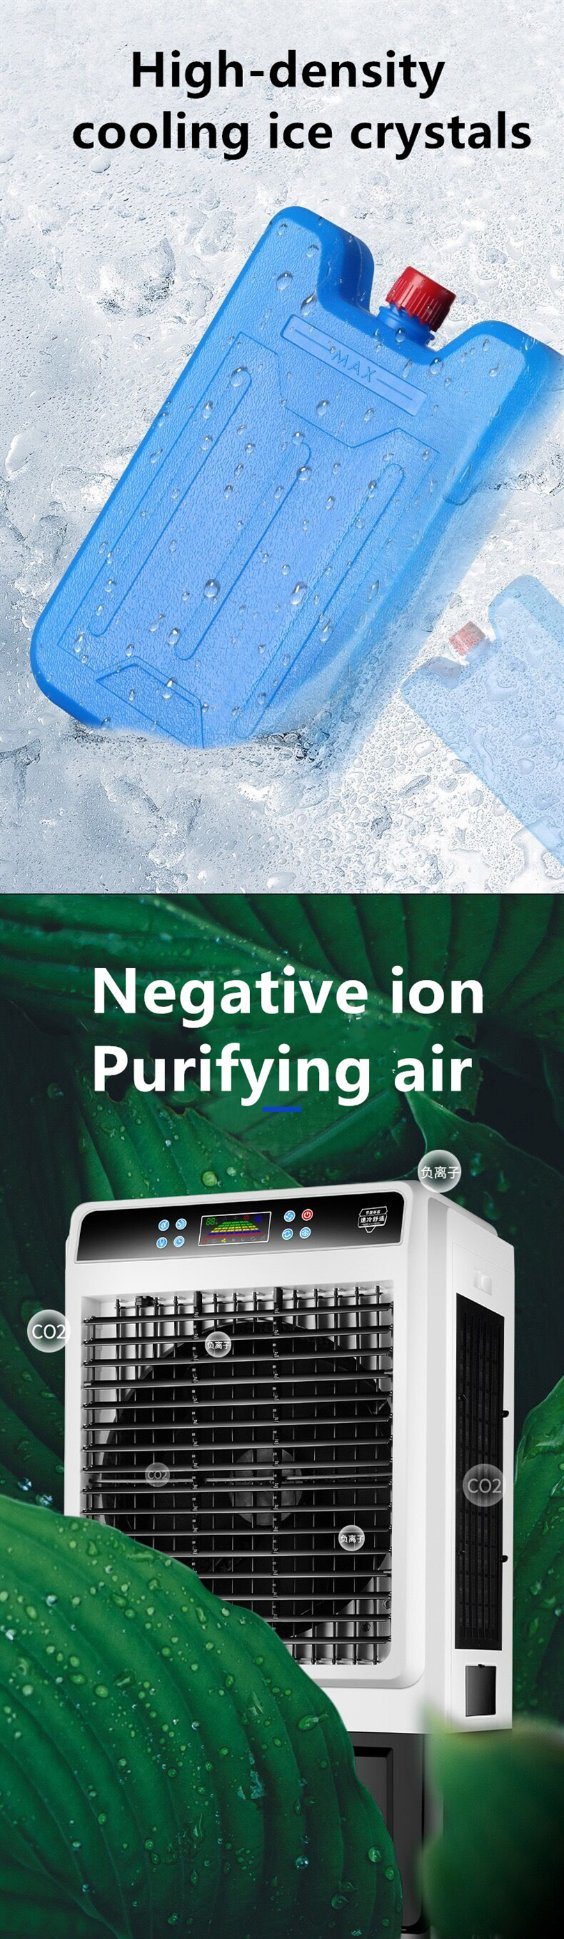 Industral Air Cooler Evaporators Standing Cooler Evaporator Evaporative Air Cooler 220V